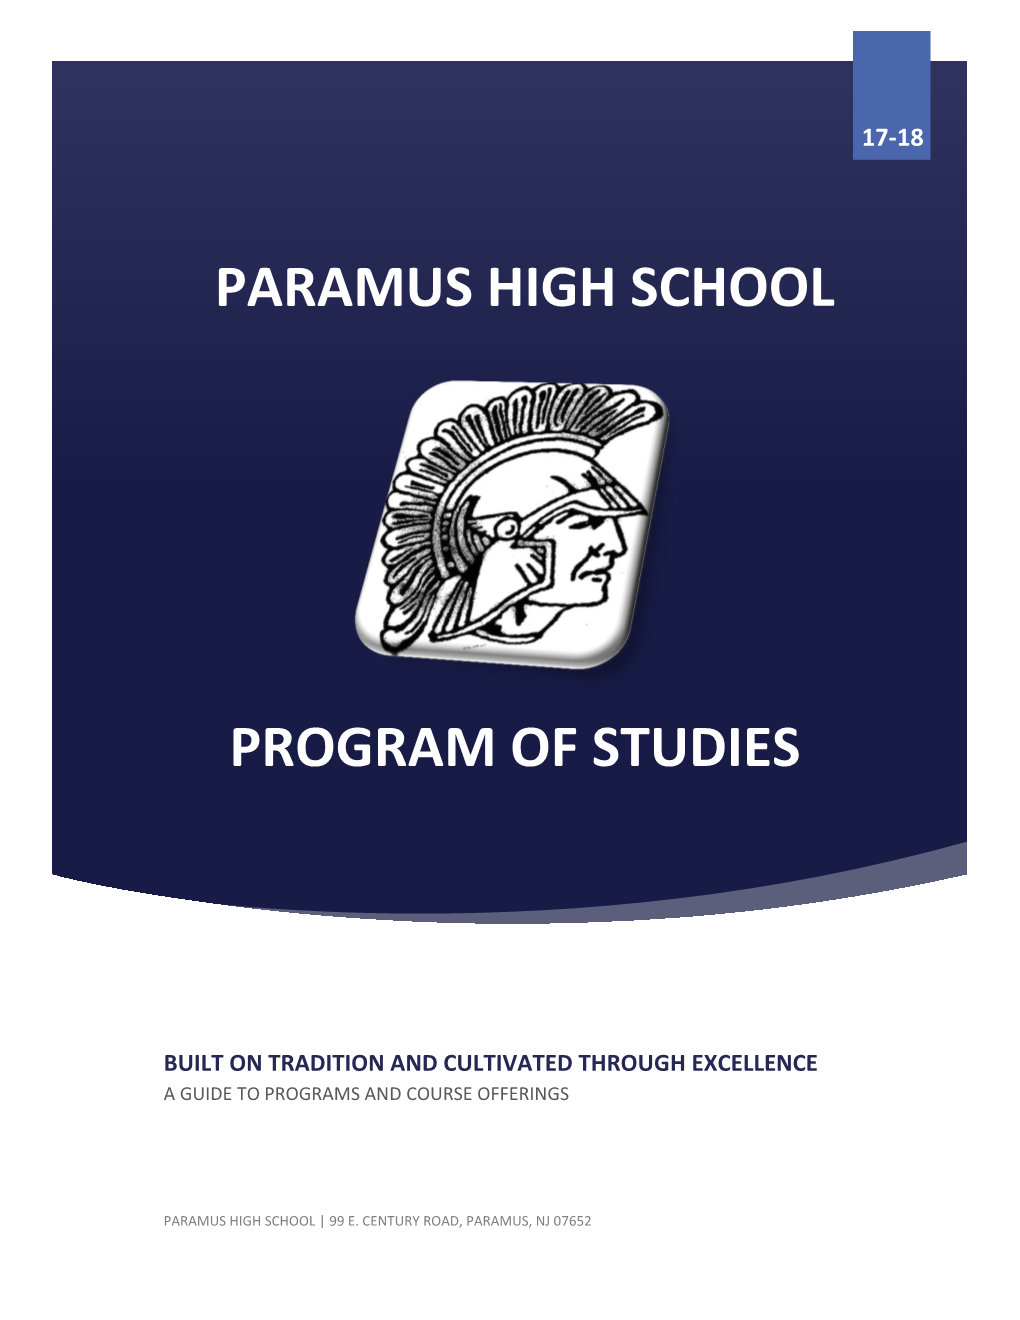 Paramus High School Program of Studies 2017-18 School Year